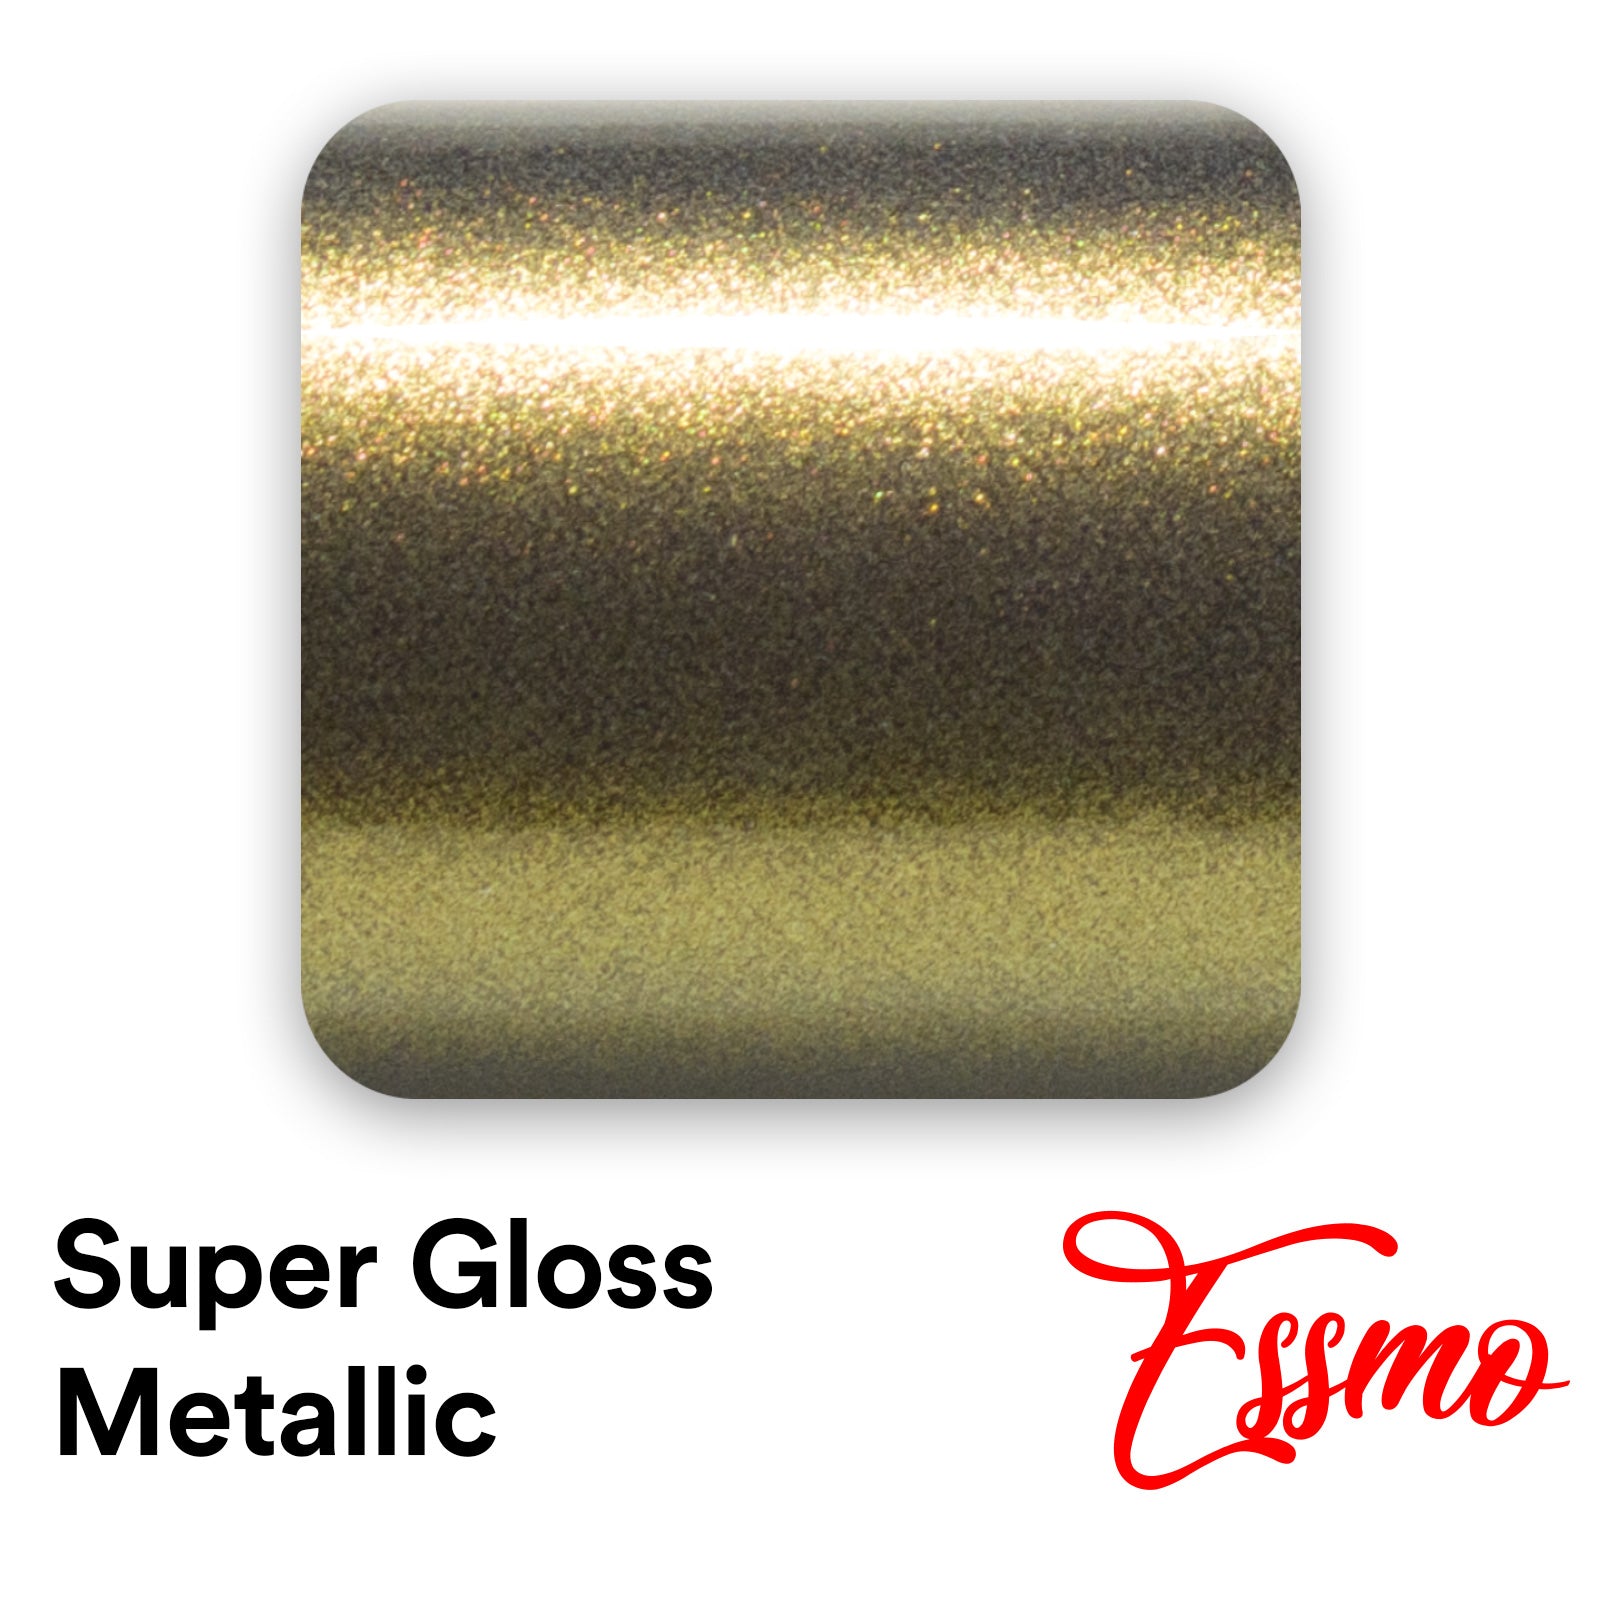 Super Gloss Metallic Bond Gold Vinyl Wrap